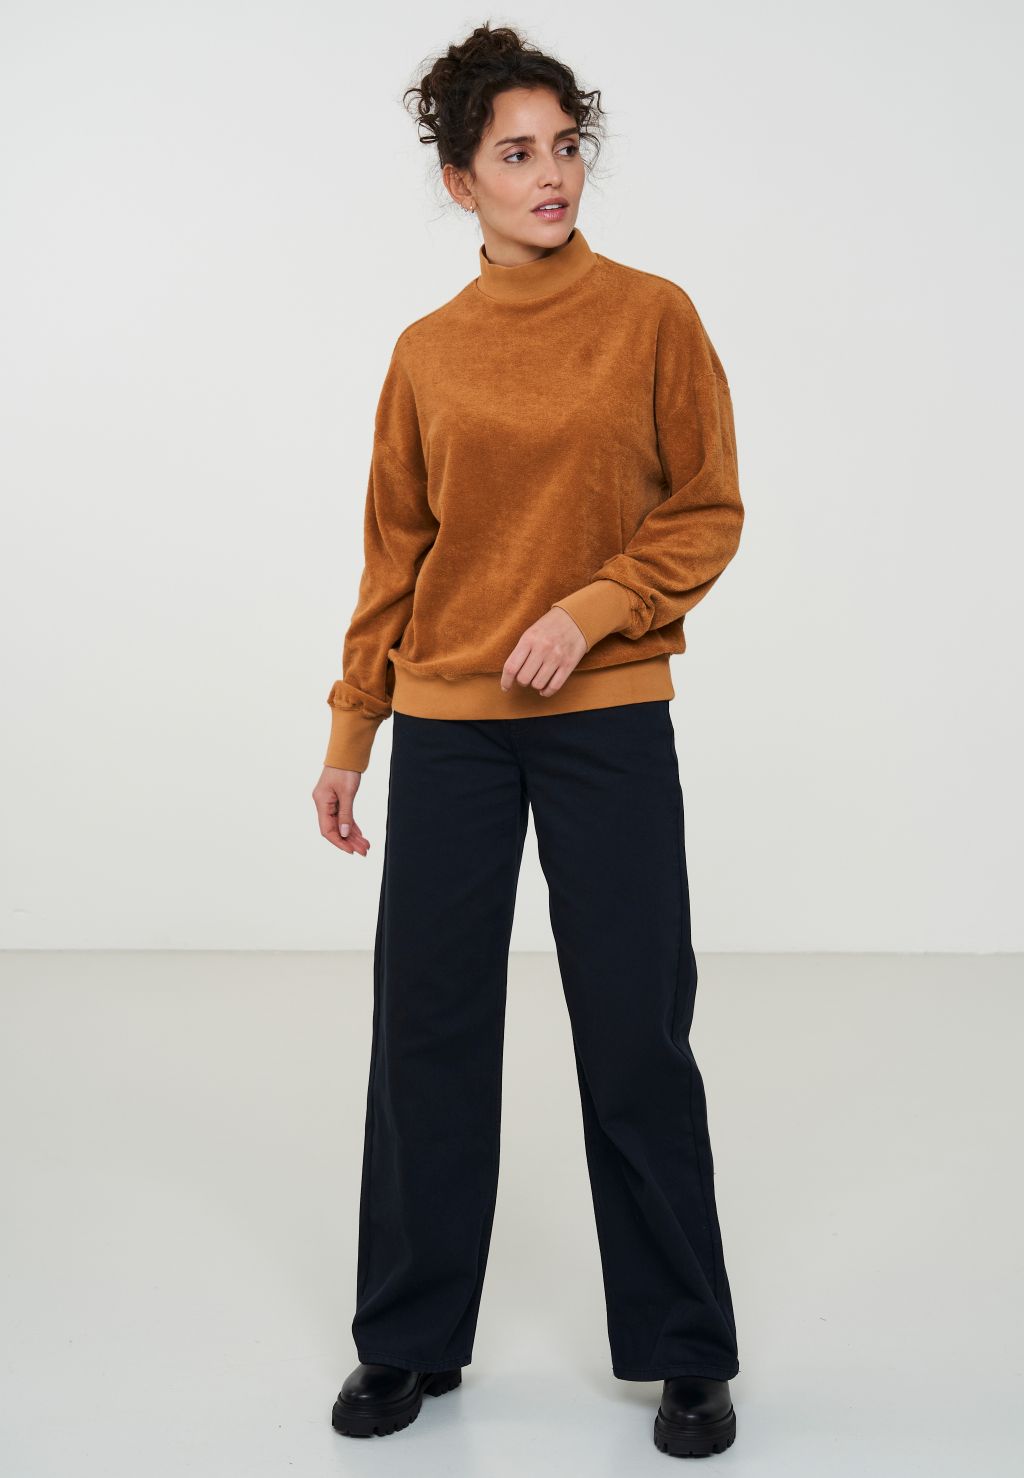 Frauen Sweatshirt Dichondra- Bio-Baumwolle Caramel XL